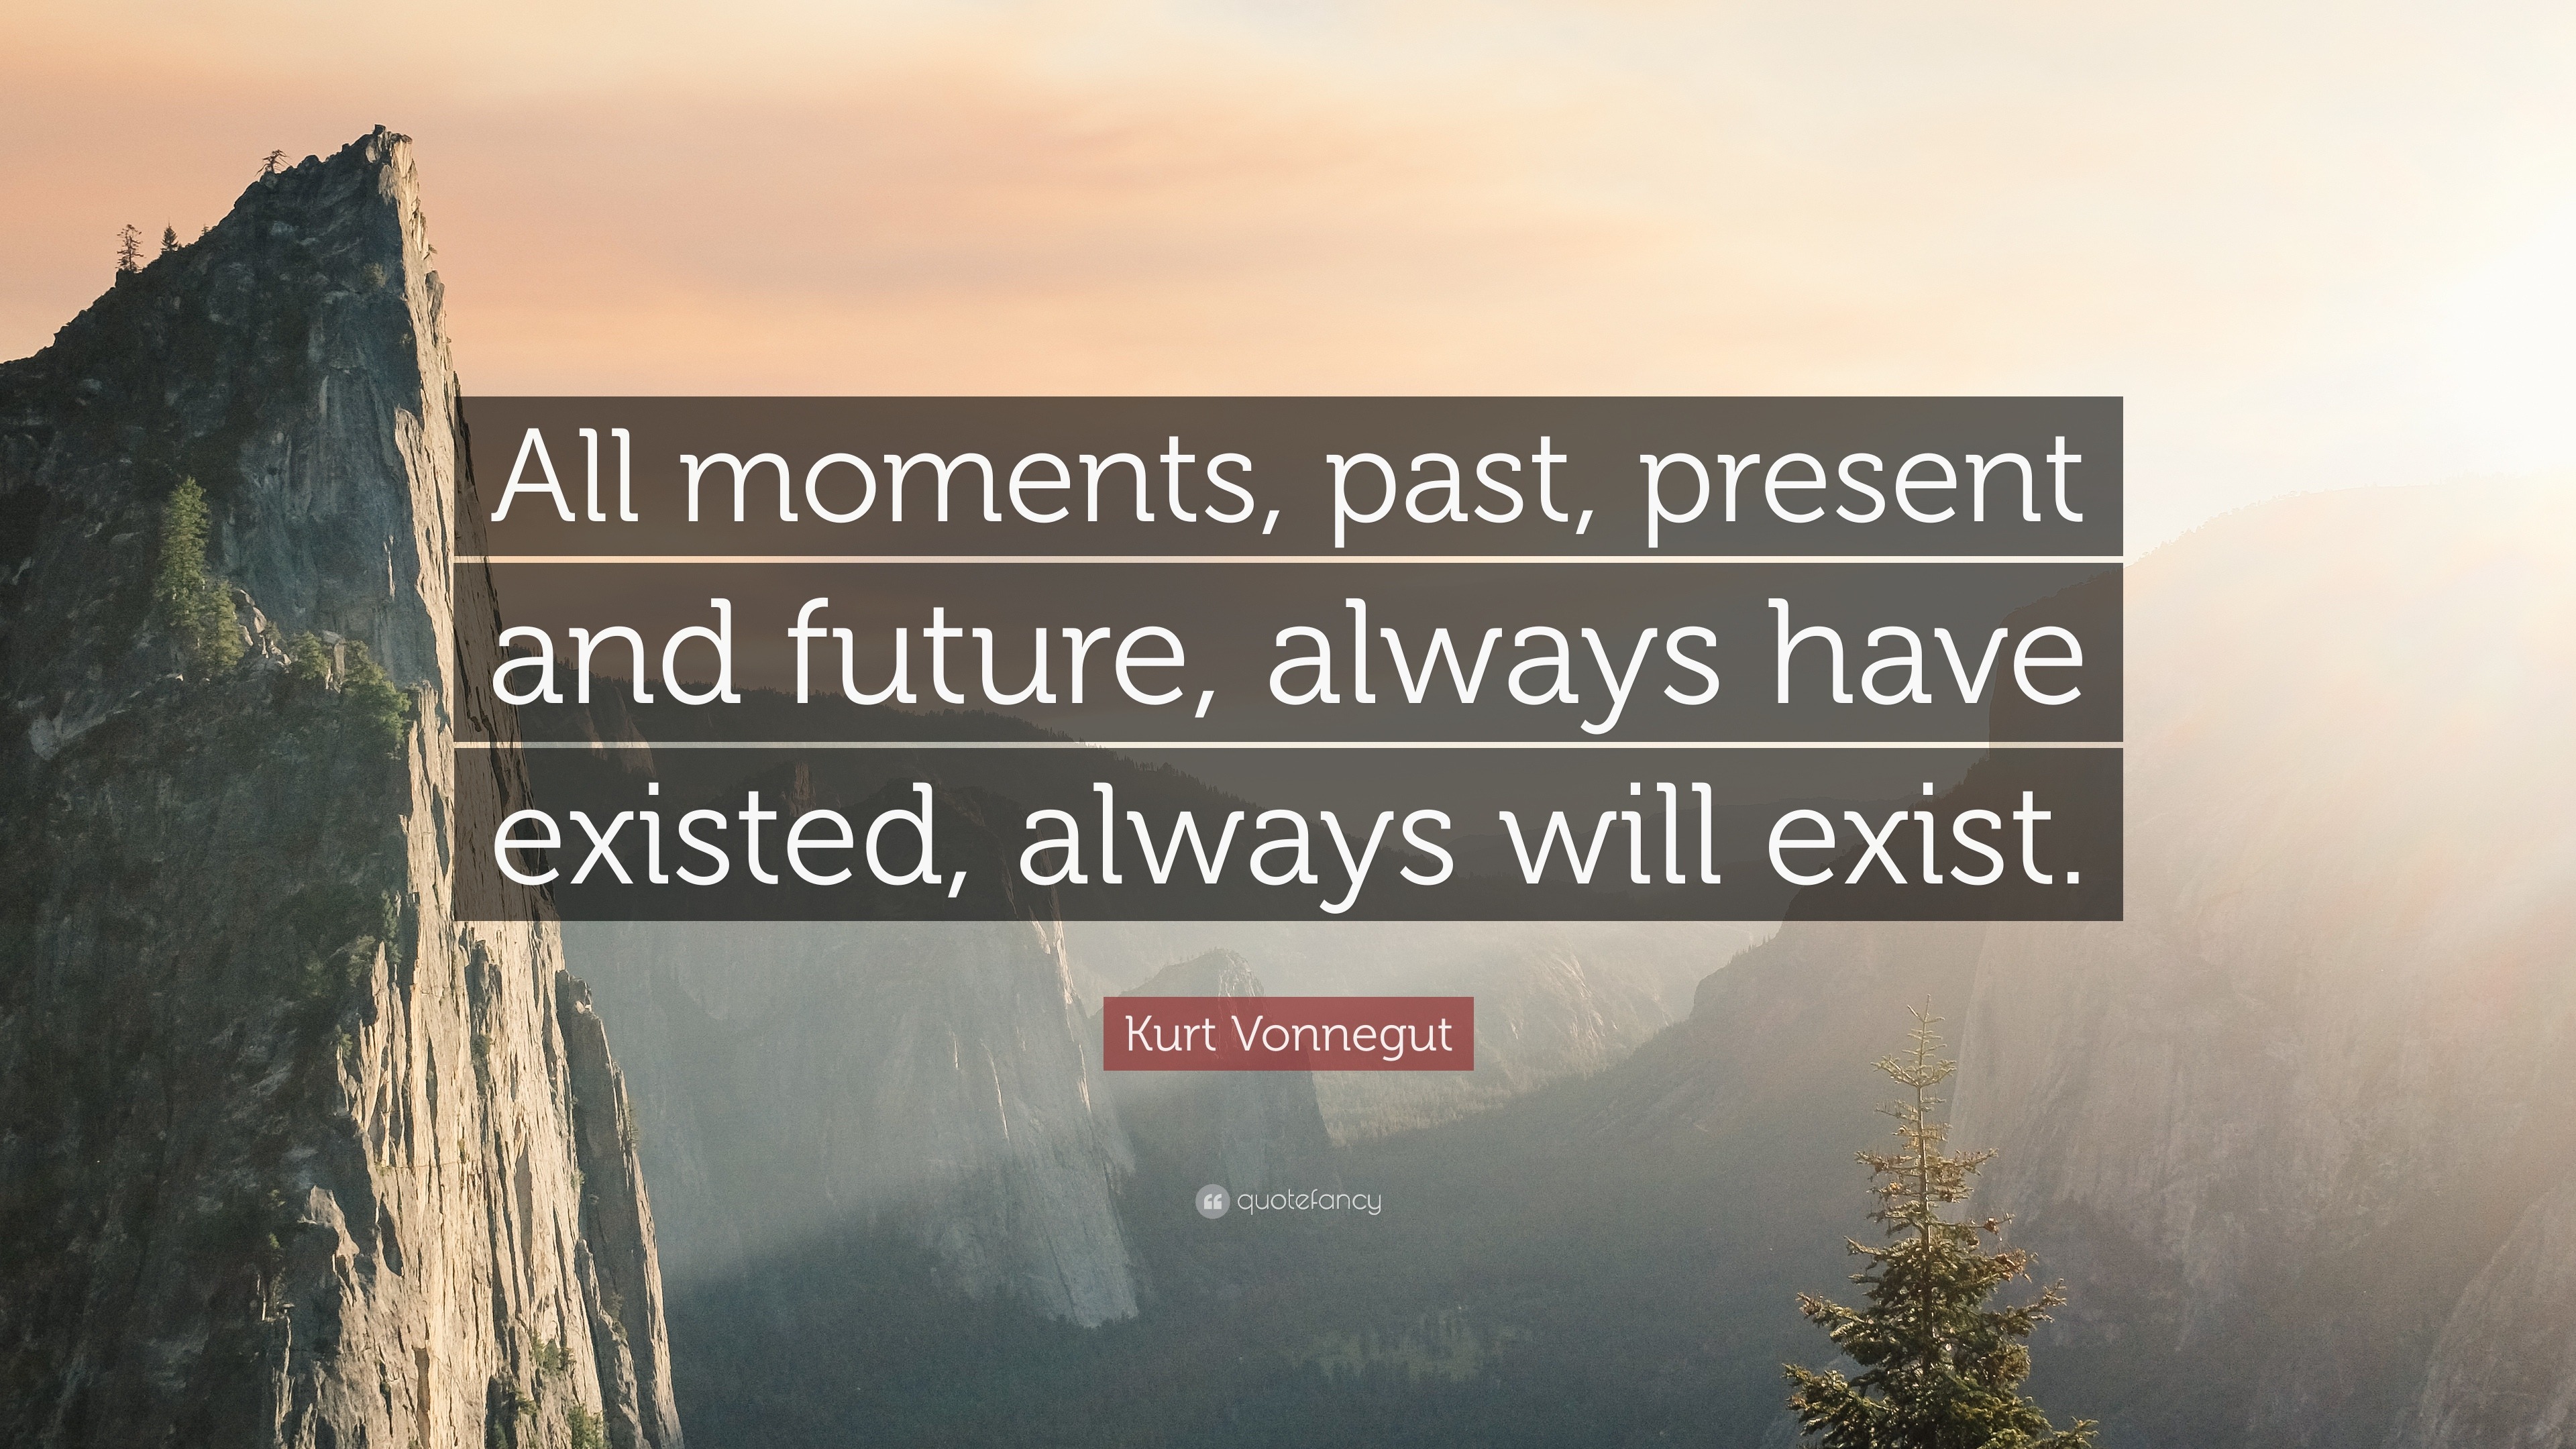 Kurt Vonnegut Quote “All moments, past, present and